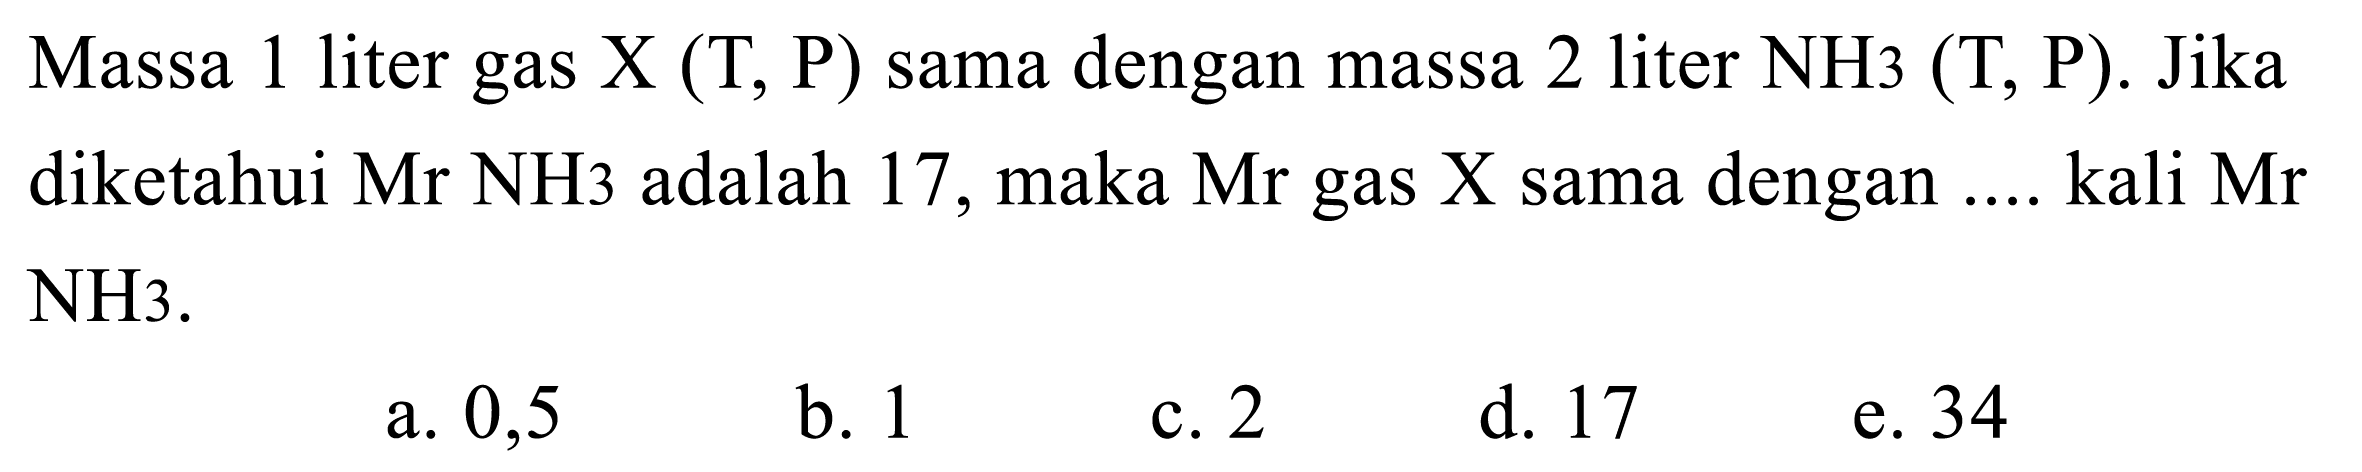 Massa 1 liter gas X(T, P)  sama dengan massa 2 liter NH 3(T, P) . Jika diketahui Mr NH 3  adalah 17 , maka Mr gas X sama dengan .... kali Mr NH 3 . 
a. 0,5
b. 1
c. 2
d. 17
e. 34